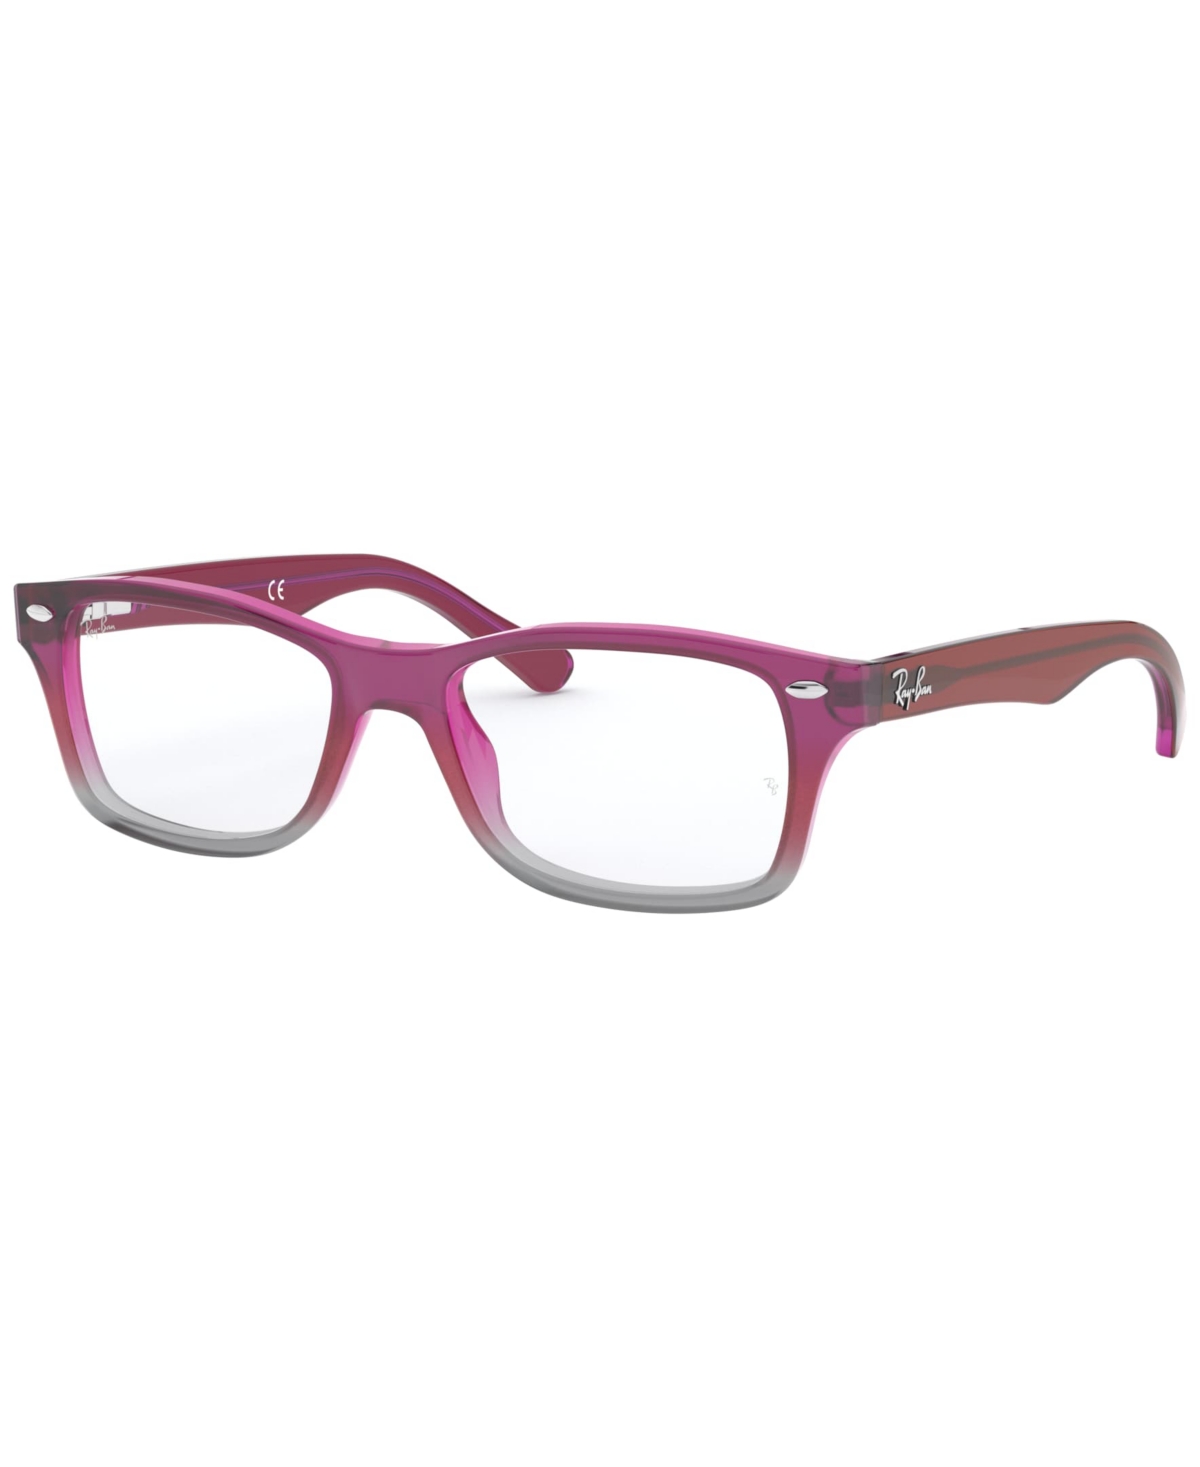 RY1531 Child Square Eyeglasses - Pink